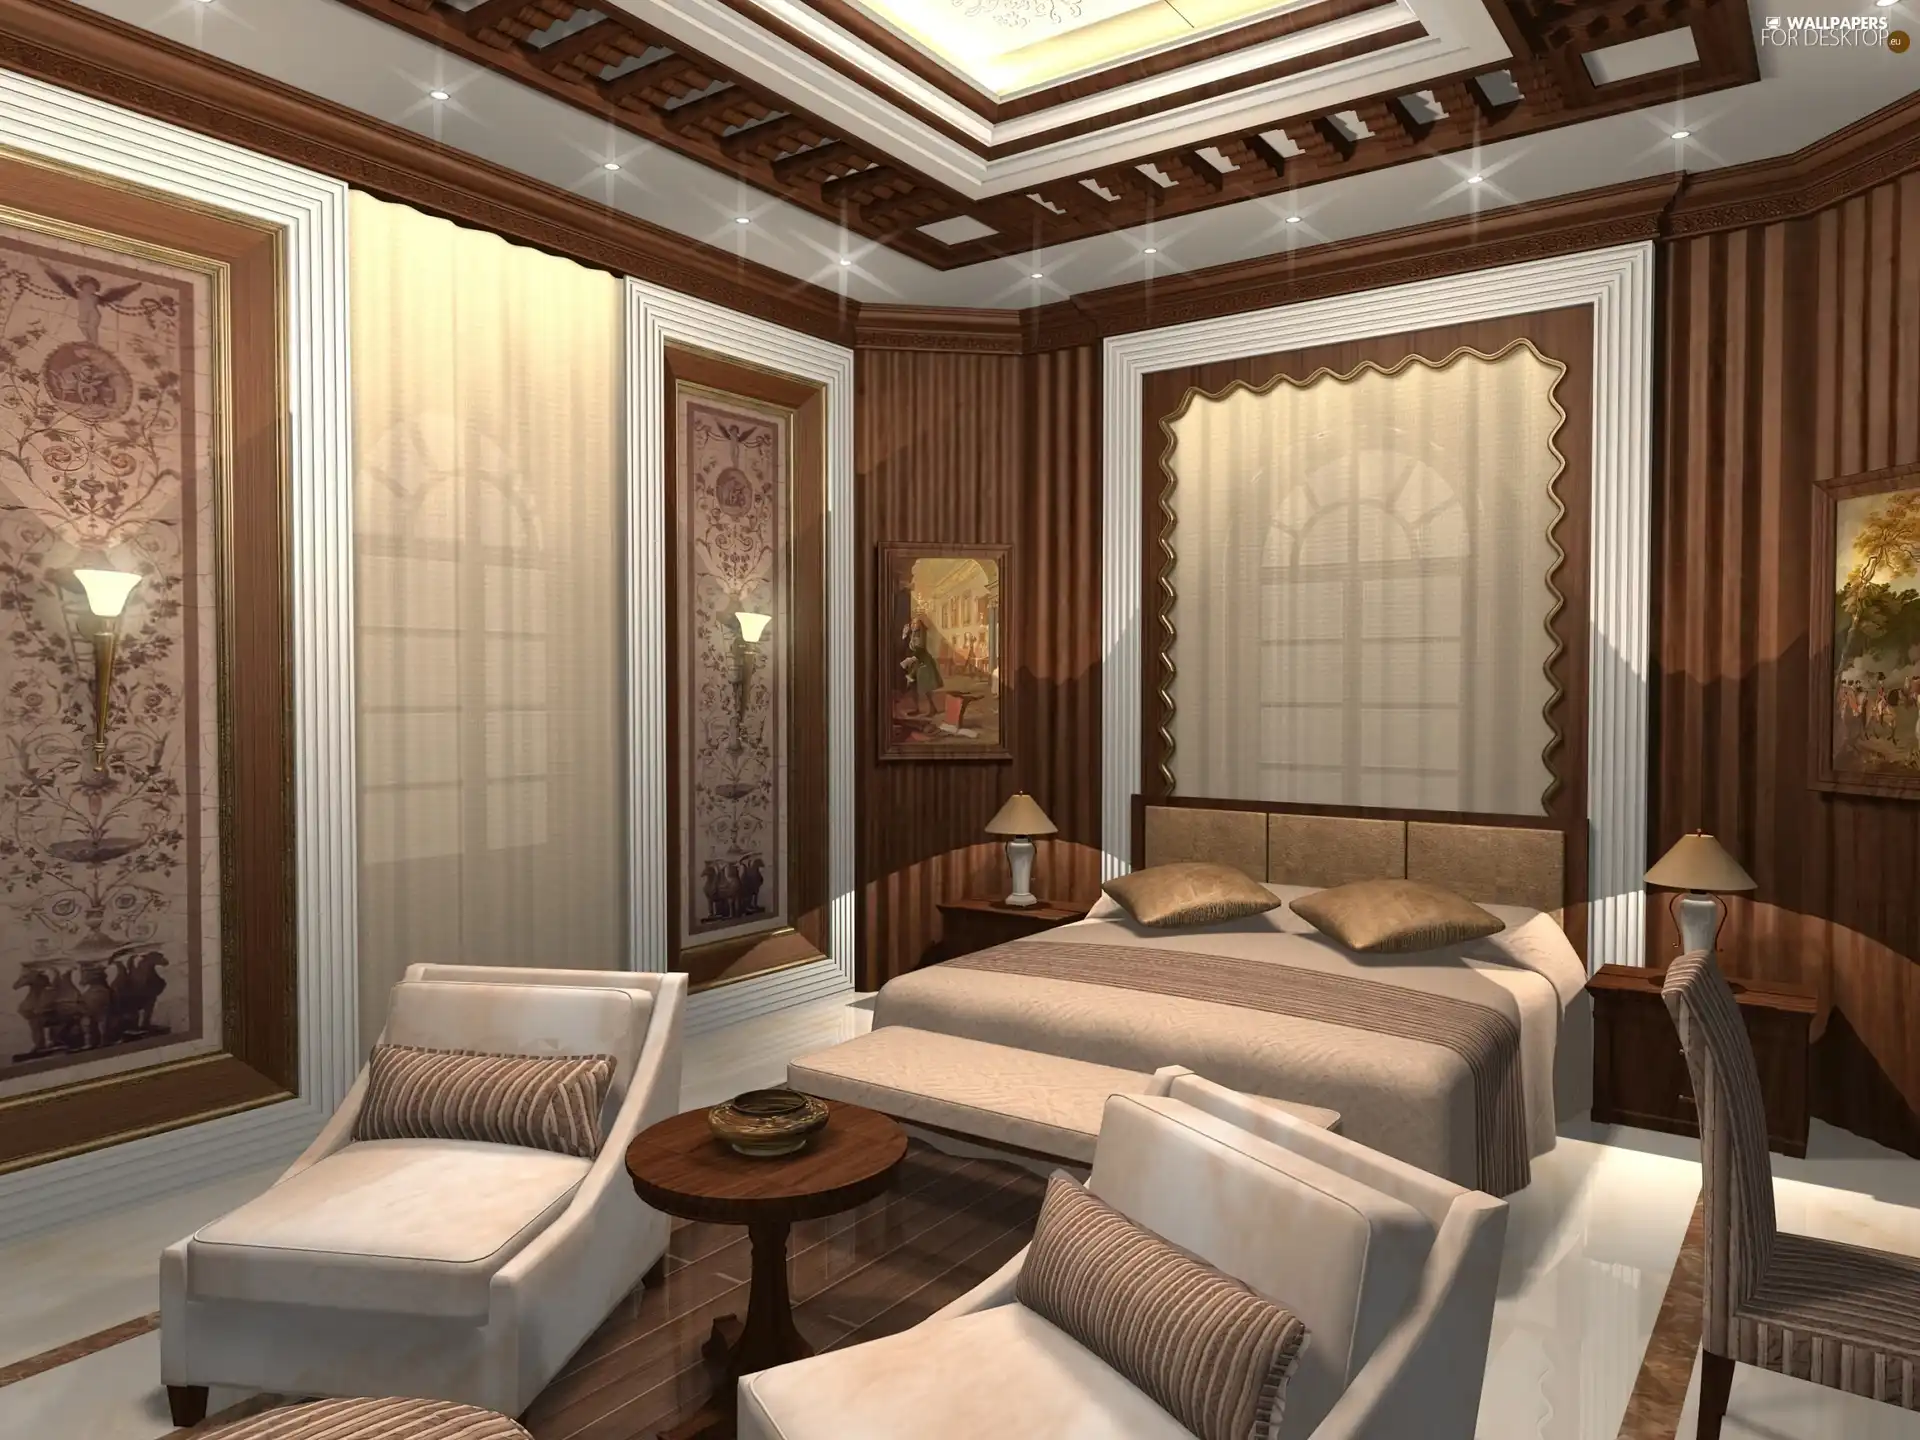 decorative, ceiling, Brown, Bedroom, beige